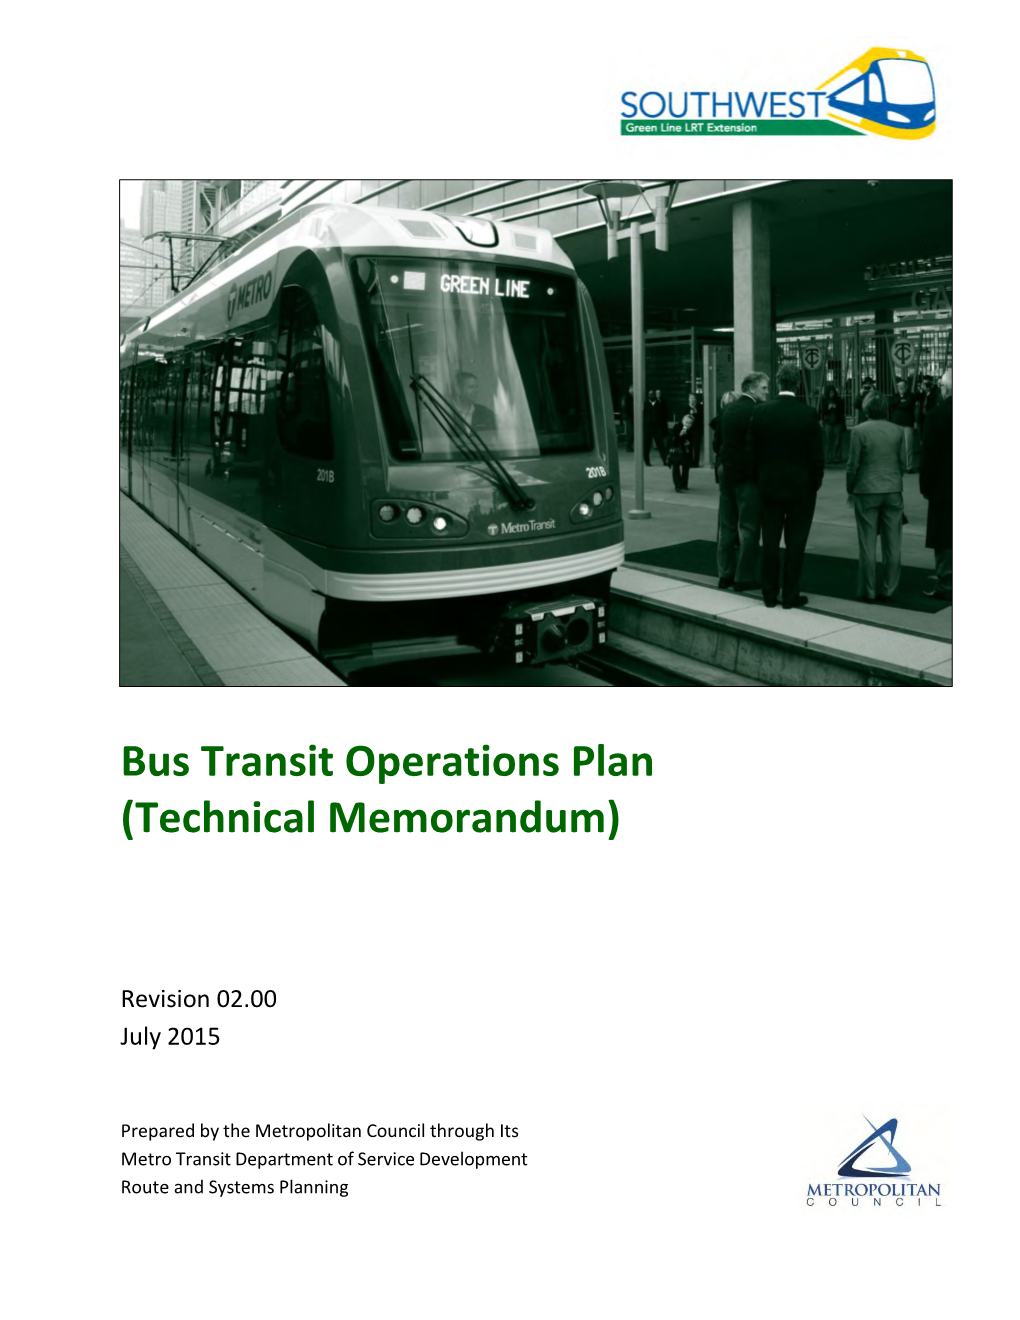 Bus Operations Plan 5 SWLRT Rev